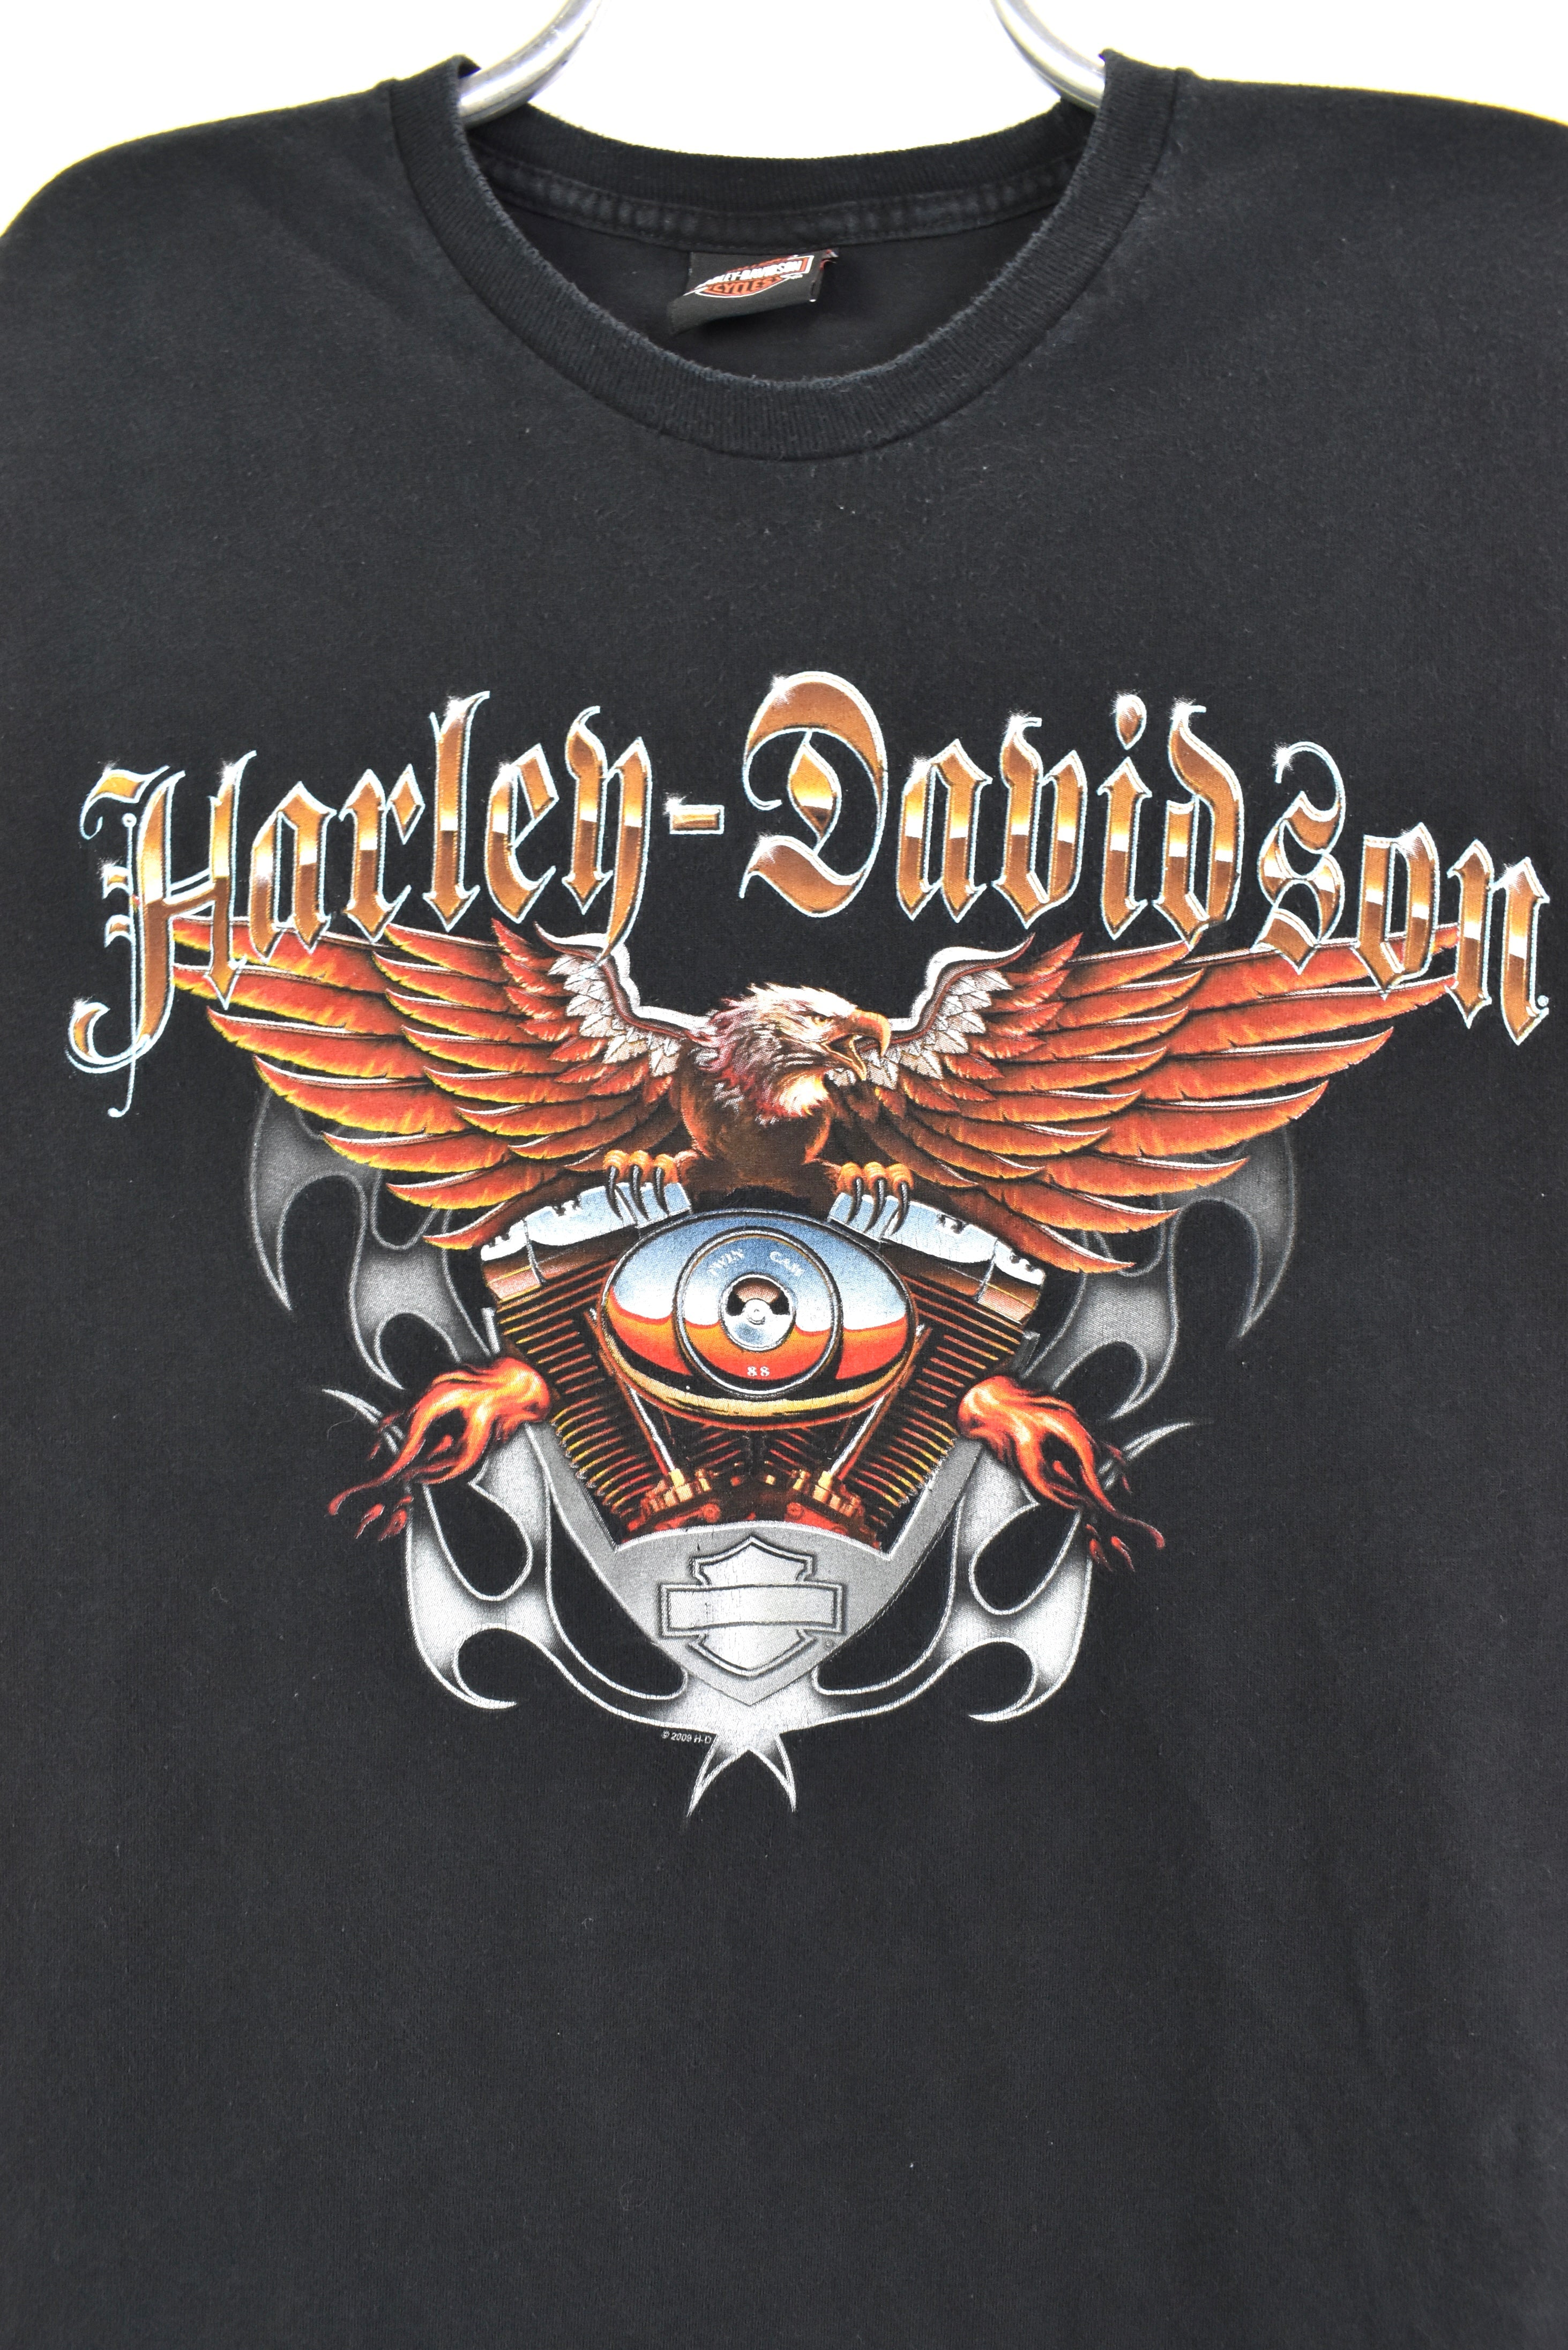 Modern Harley Davidson shirt, 2008 short sleeve graphic tee - XL, black HARLEY DAVIDSON